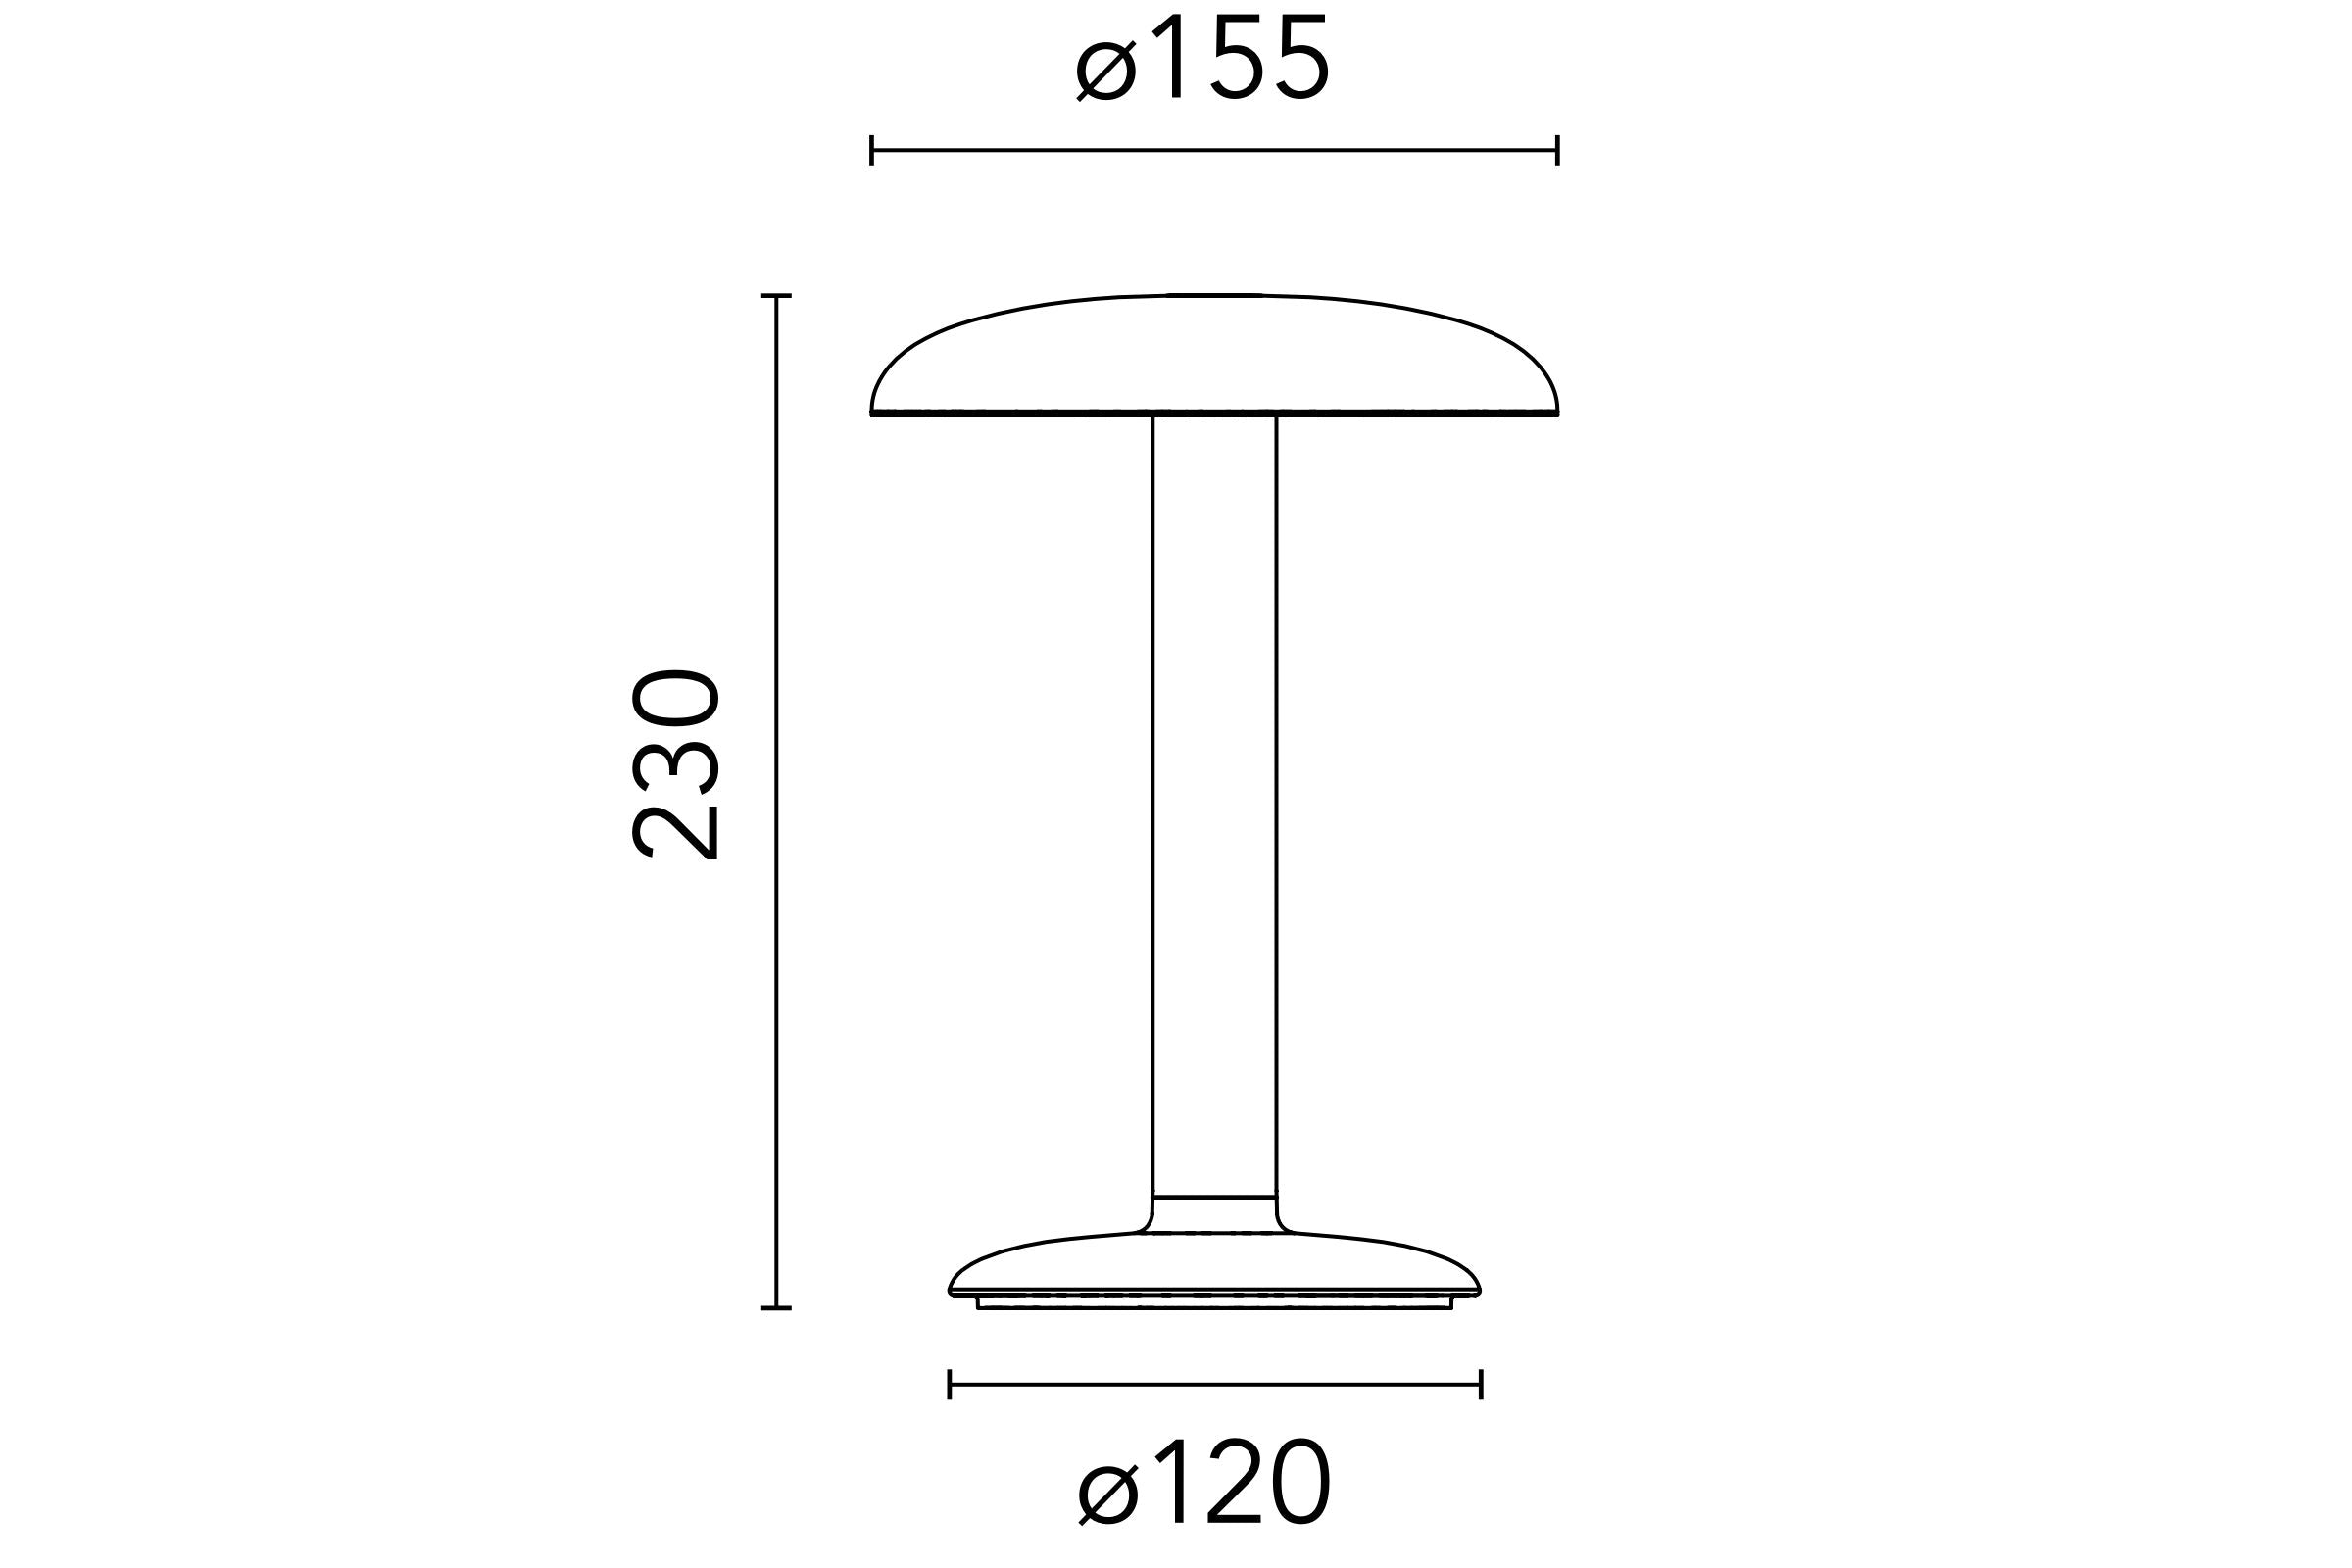 Flos Gustave Table Lamp 2700 K, lakeret pande